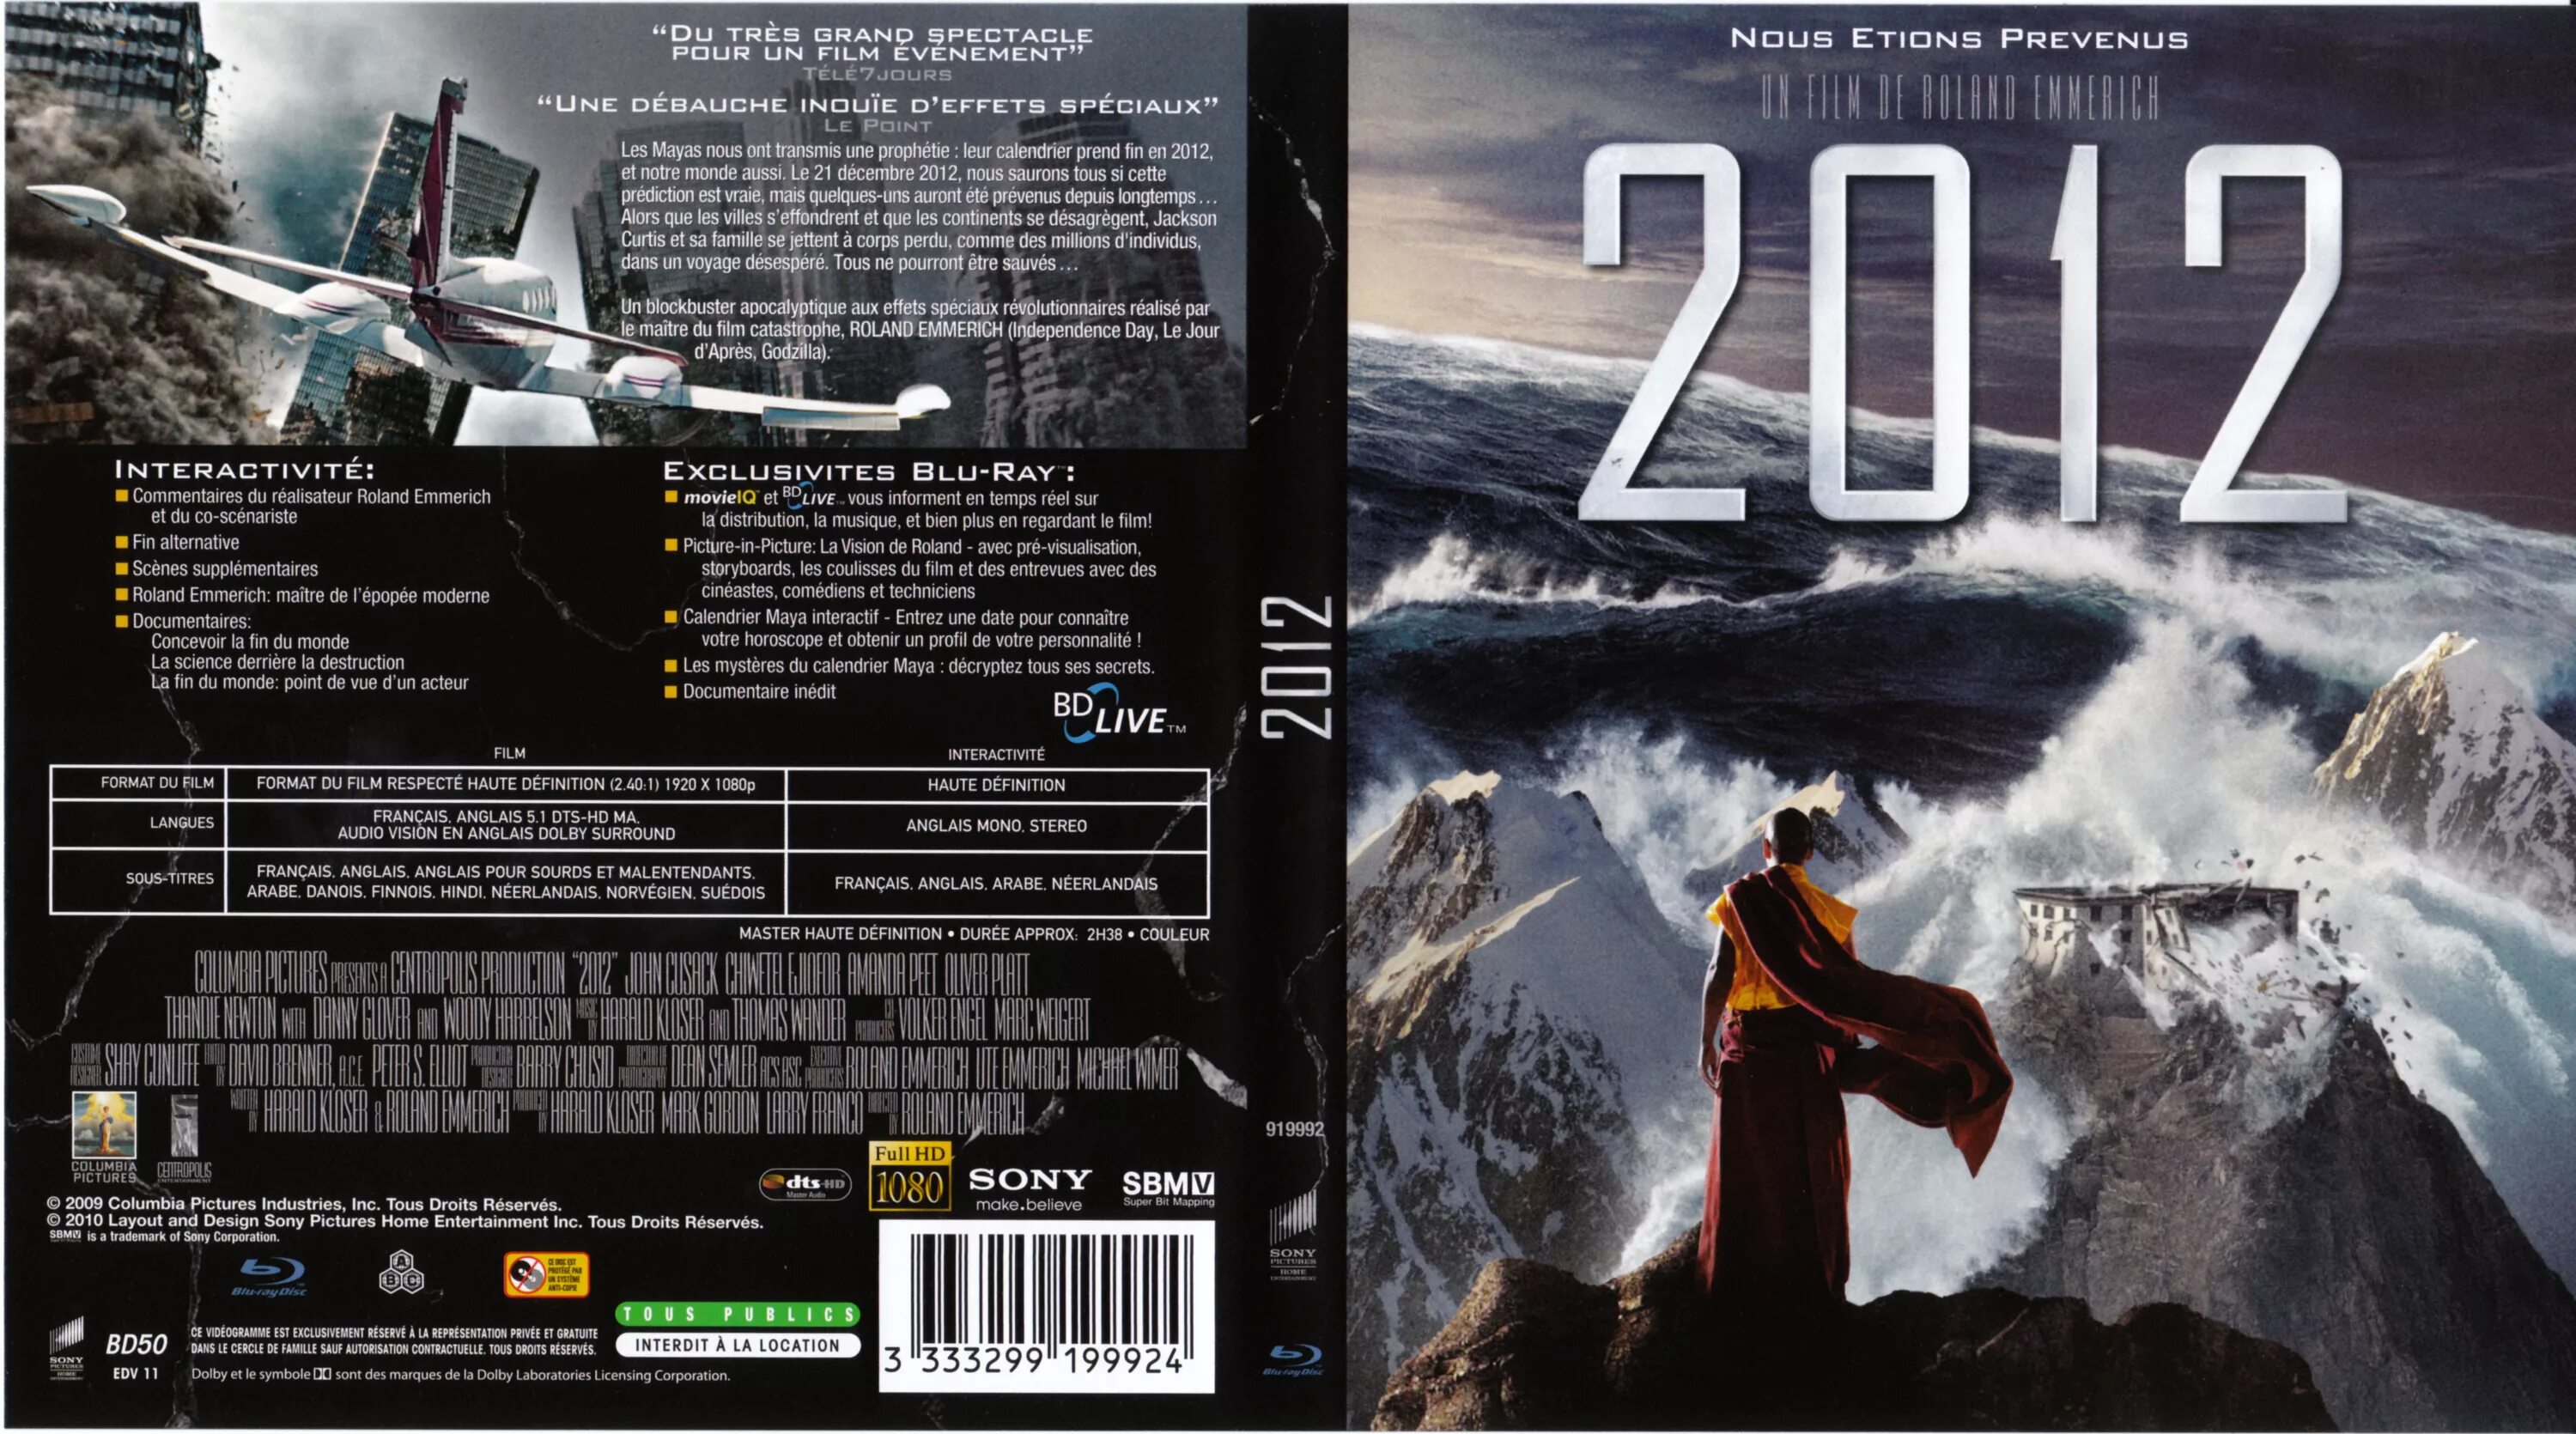 2012.2009 Blu ray. 2012 (2009) Blu-ray Cover. 2012 (DVD). Blu ray обложки. 2012 обложка